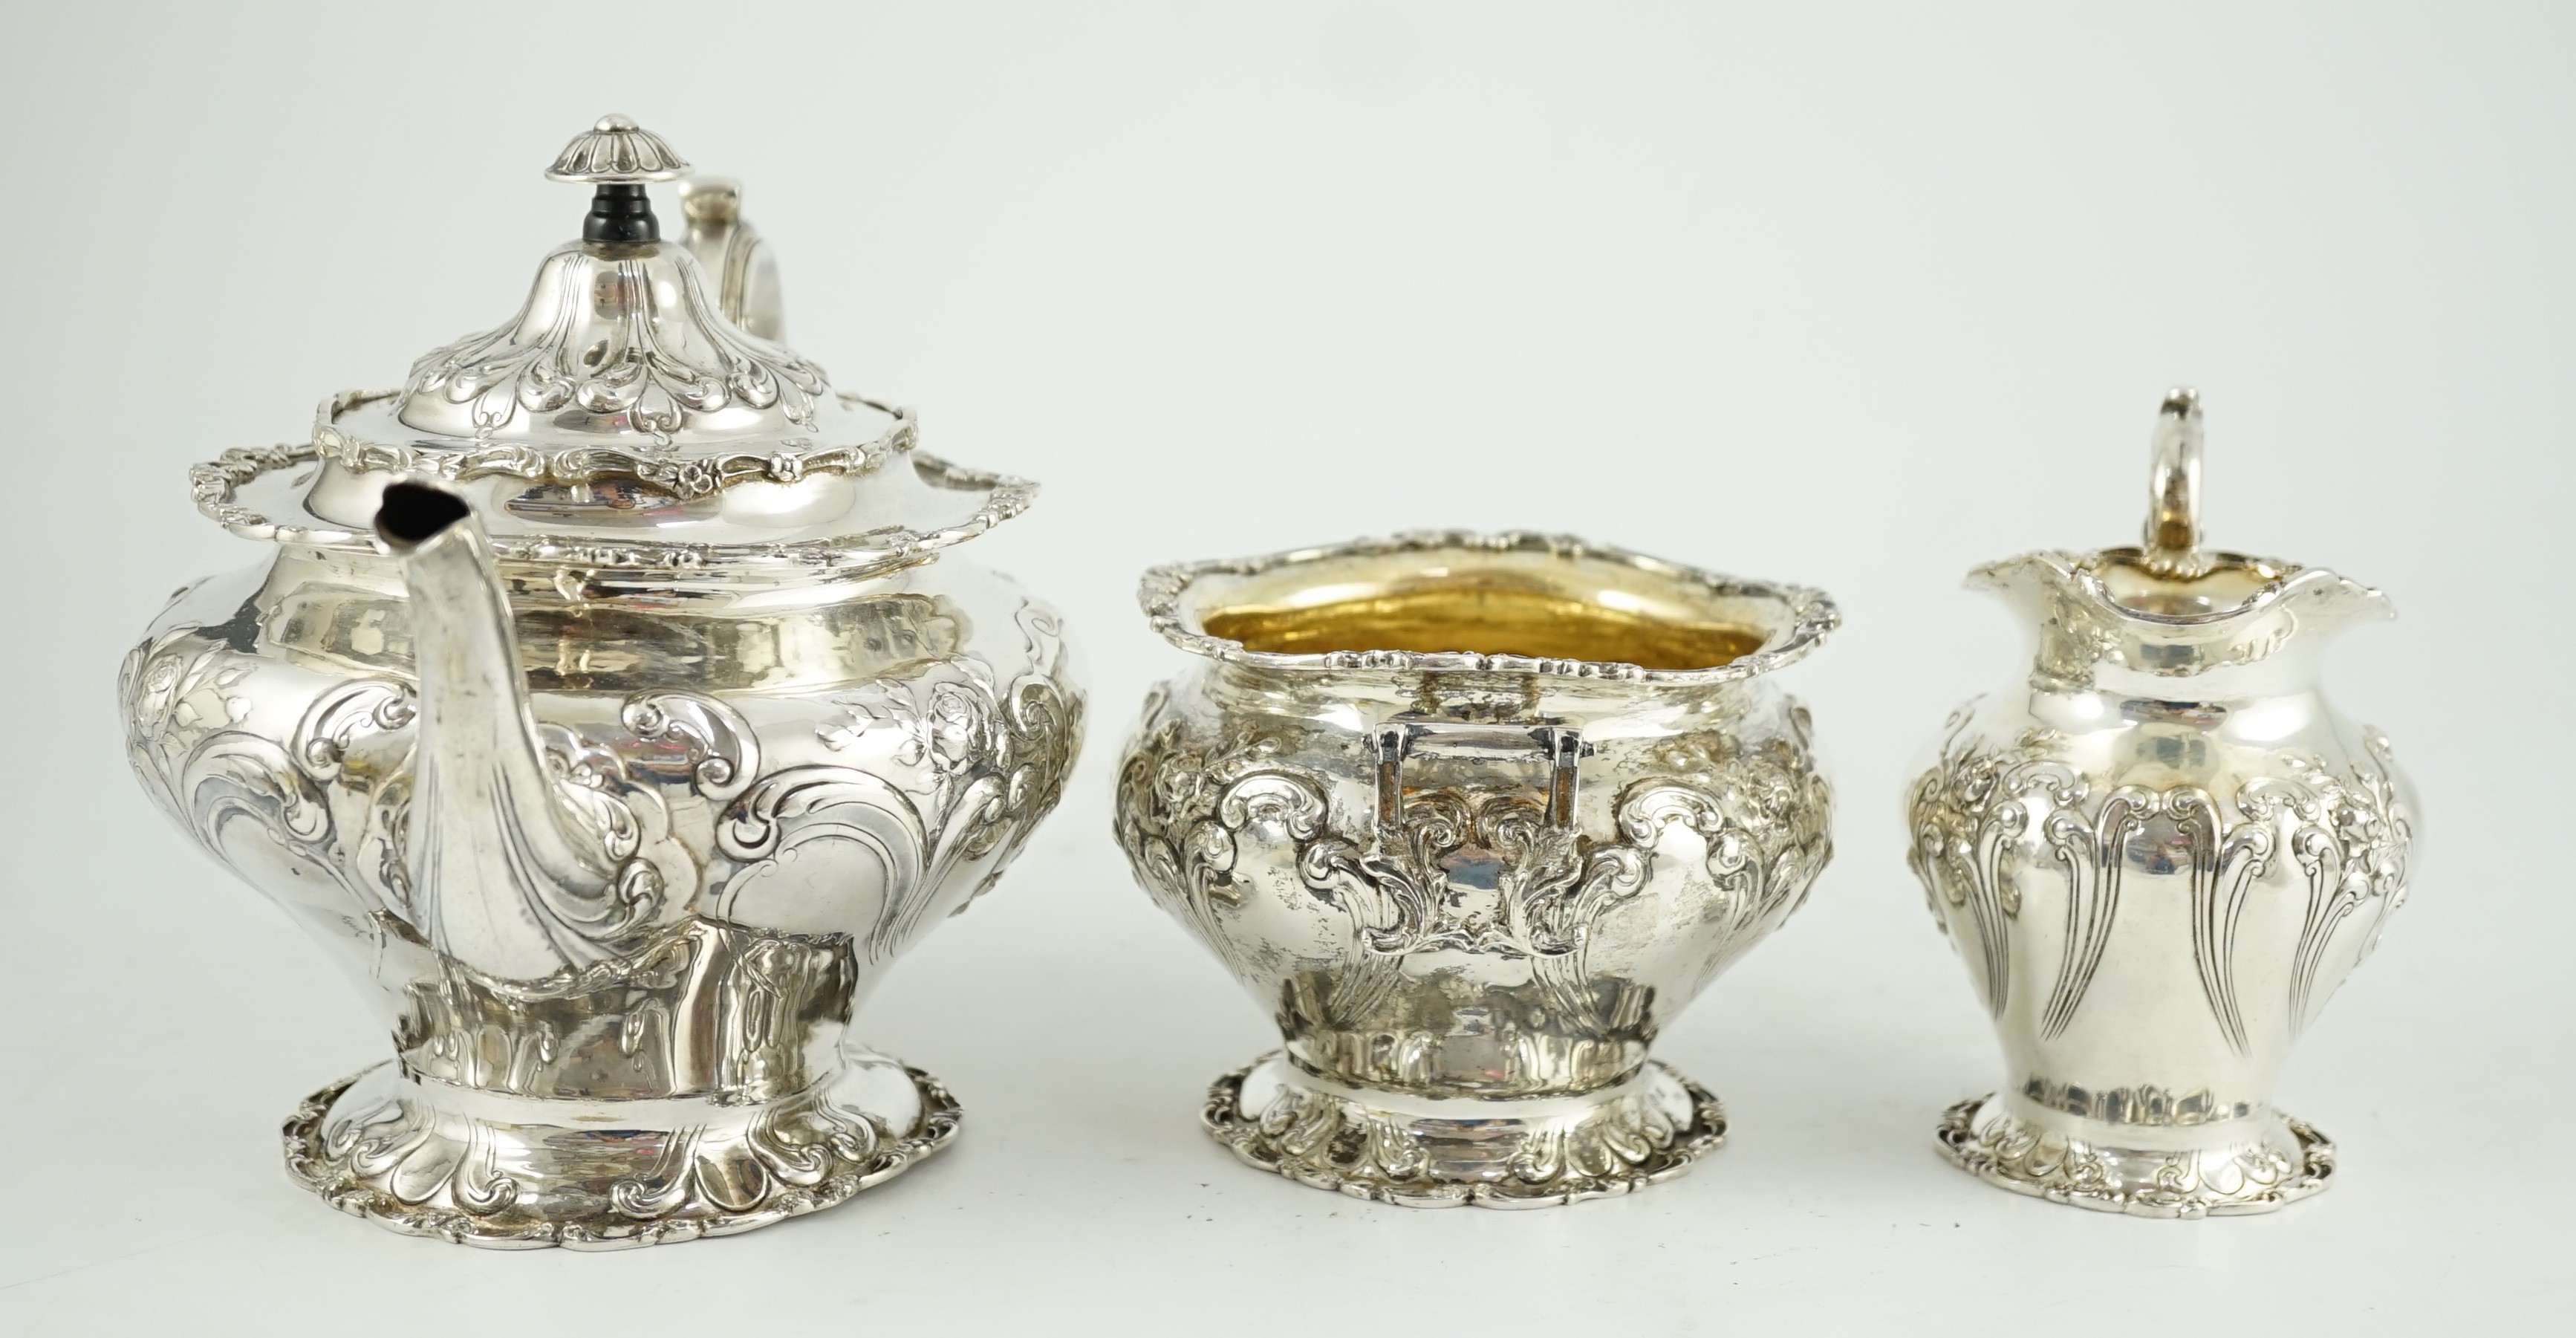 An Edwardian Scottish repousse silver three piece tea set, by Robert Scott